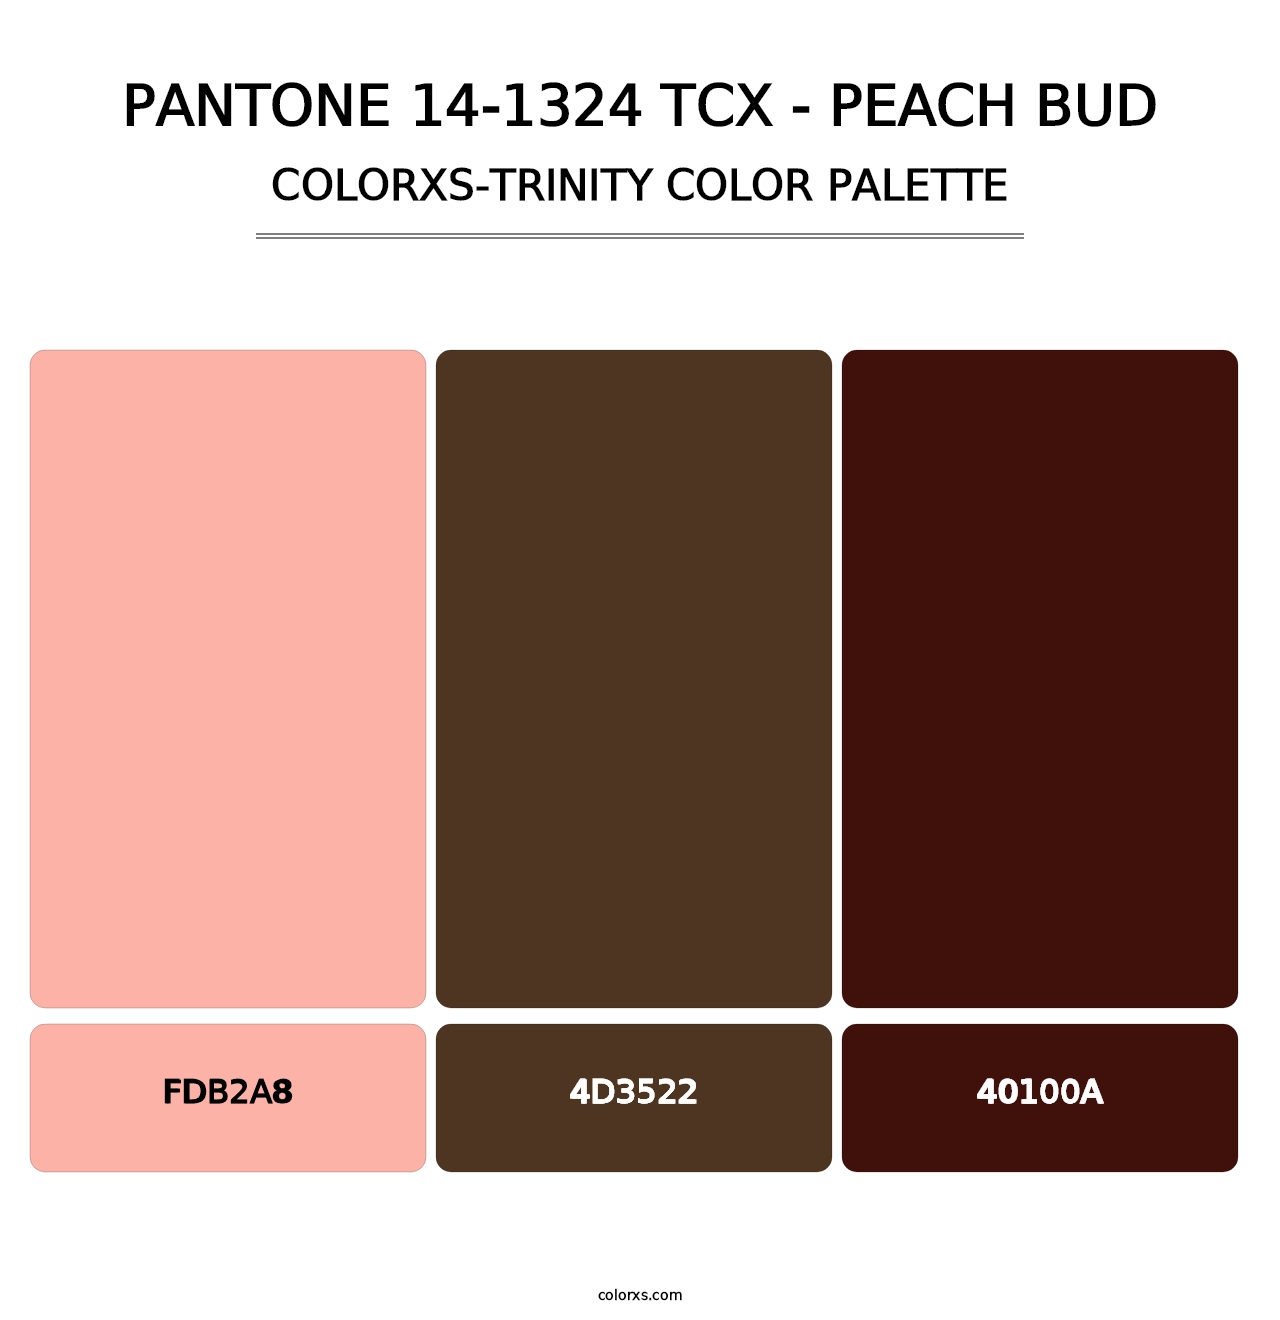 PANTONE 14-1324 TCX - Peach Bud - Colorxs Trinity Palette